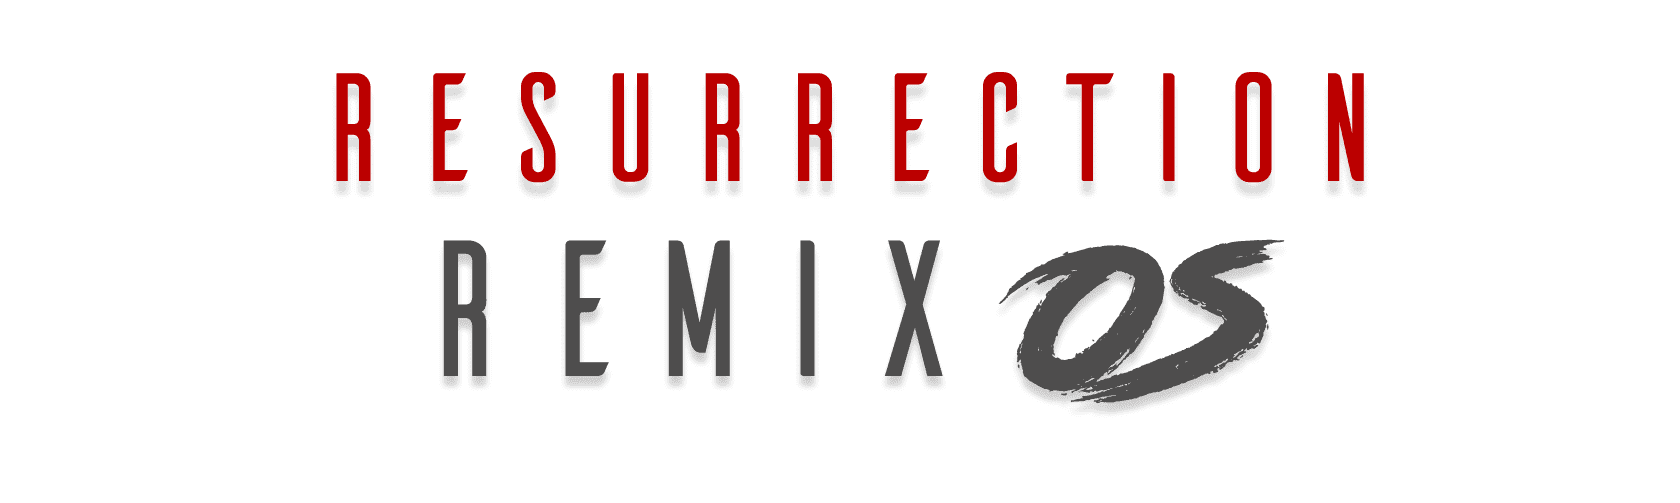 Resurrction Remix